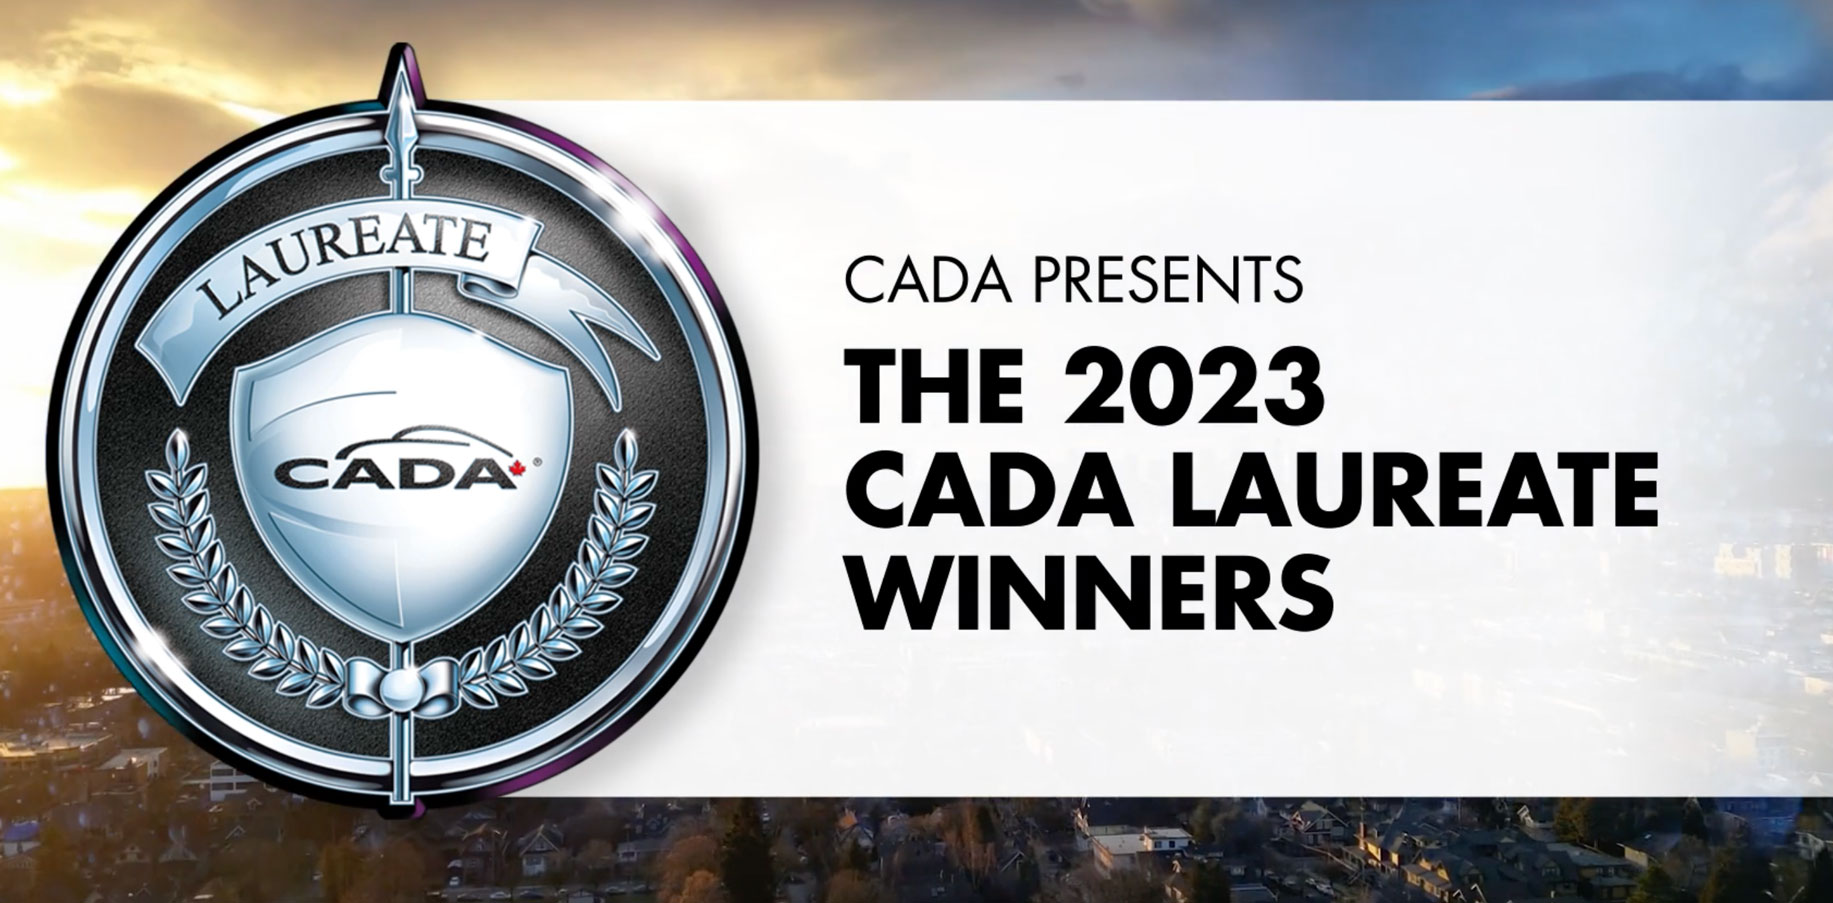 Meet the 2023 CADA Laureate winners!